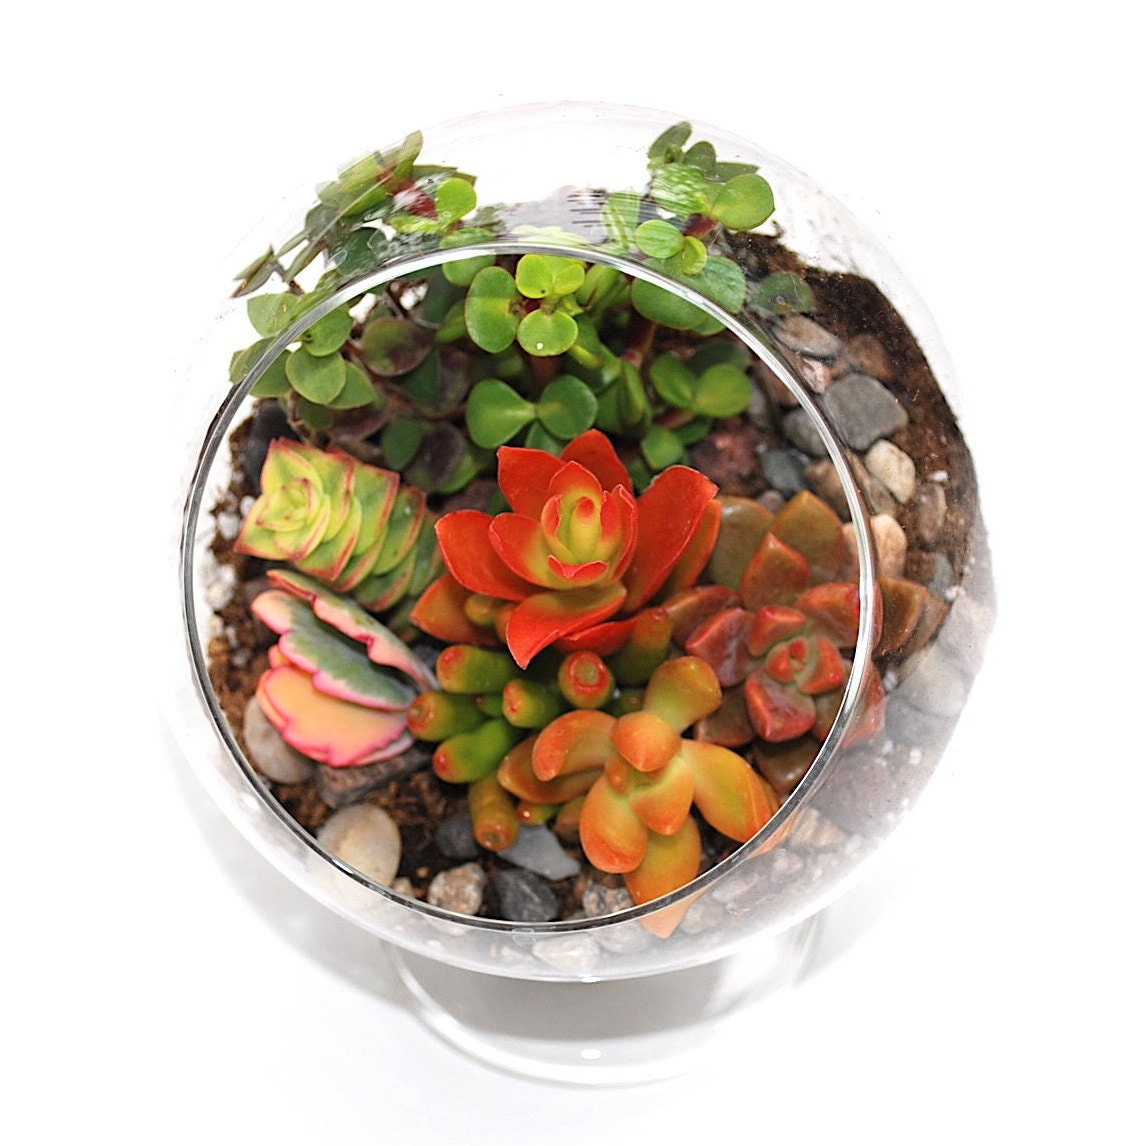 Succulent Plant Small Glass Globe Planter DIY Complete Kit.